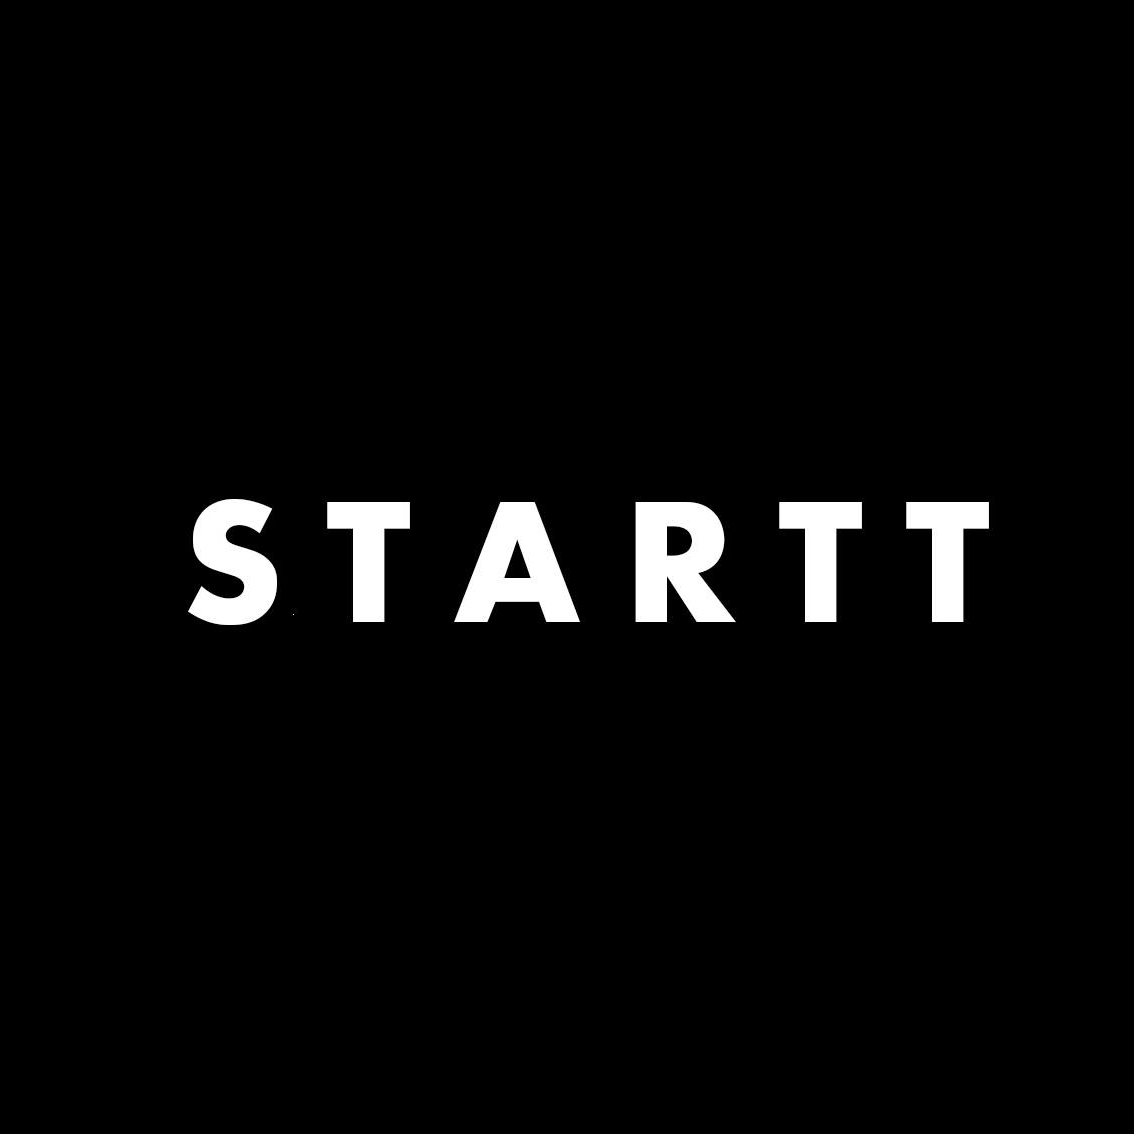 STARTT